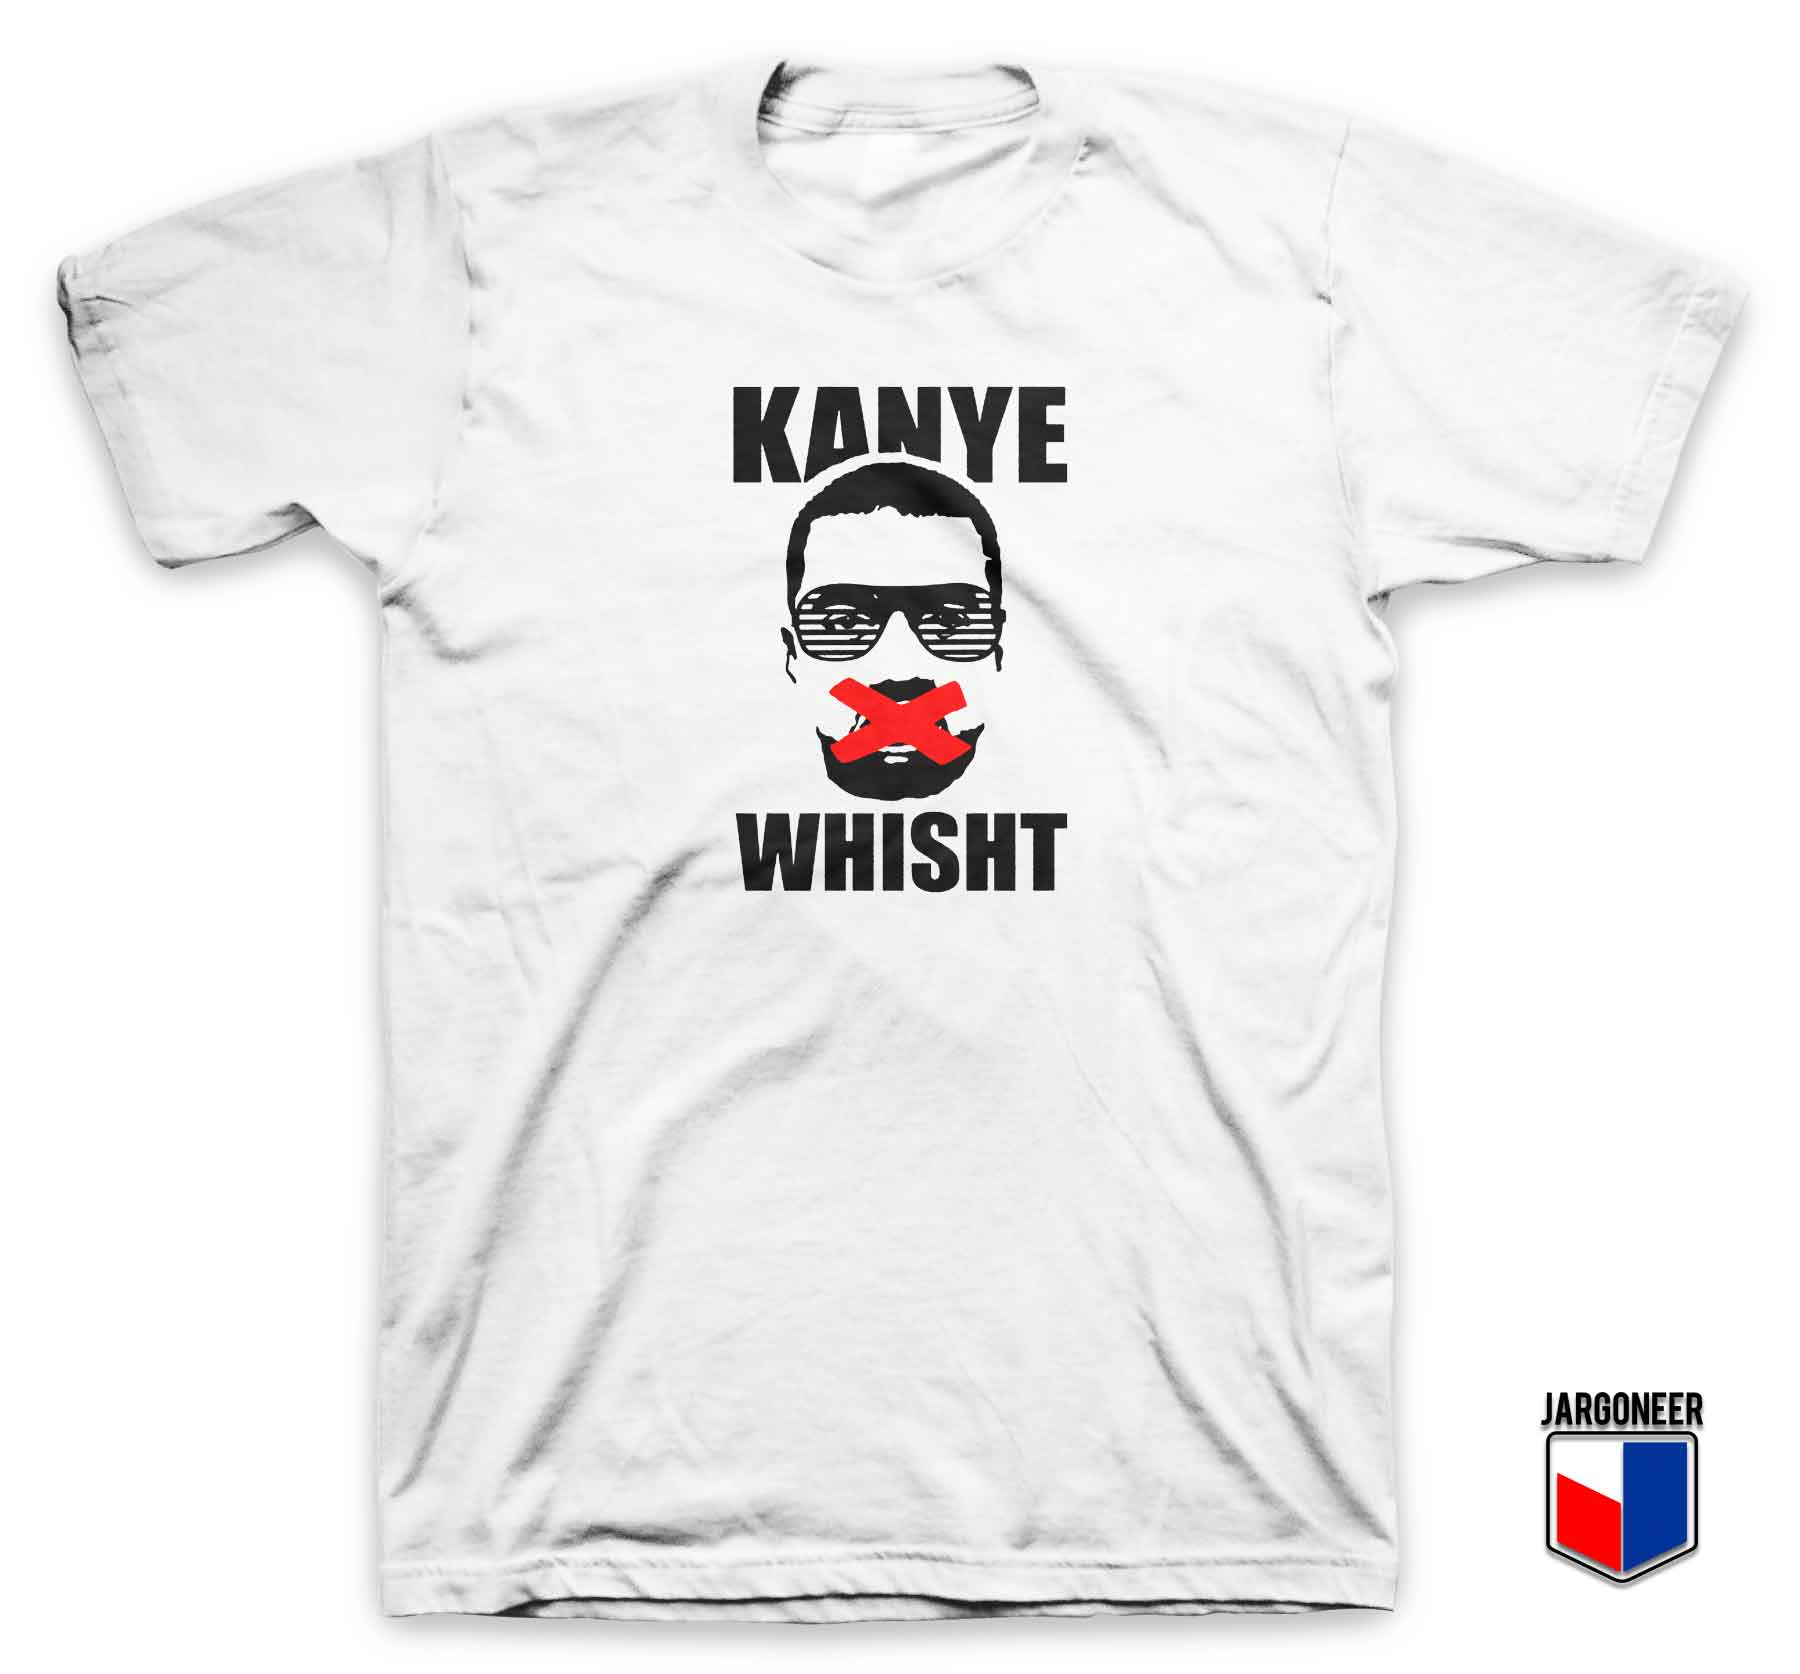 Kanye Whisth - Shop Unique Graphic Cool Shirt Designs